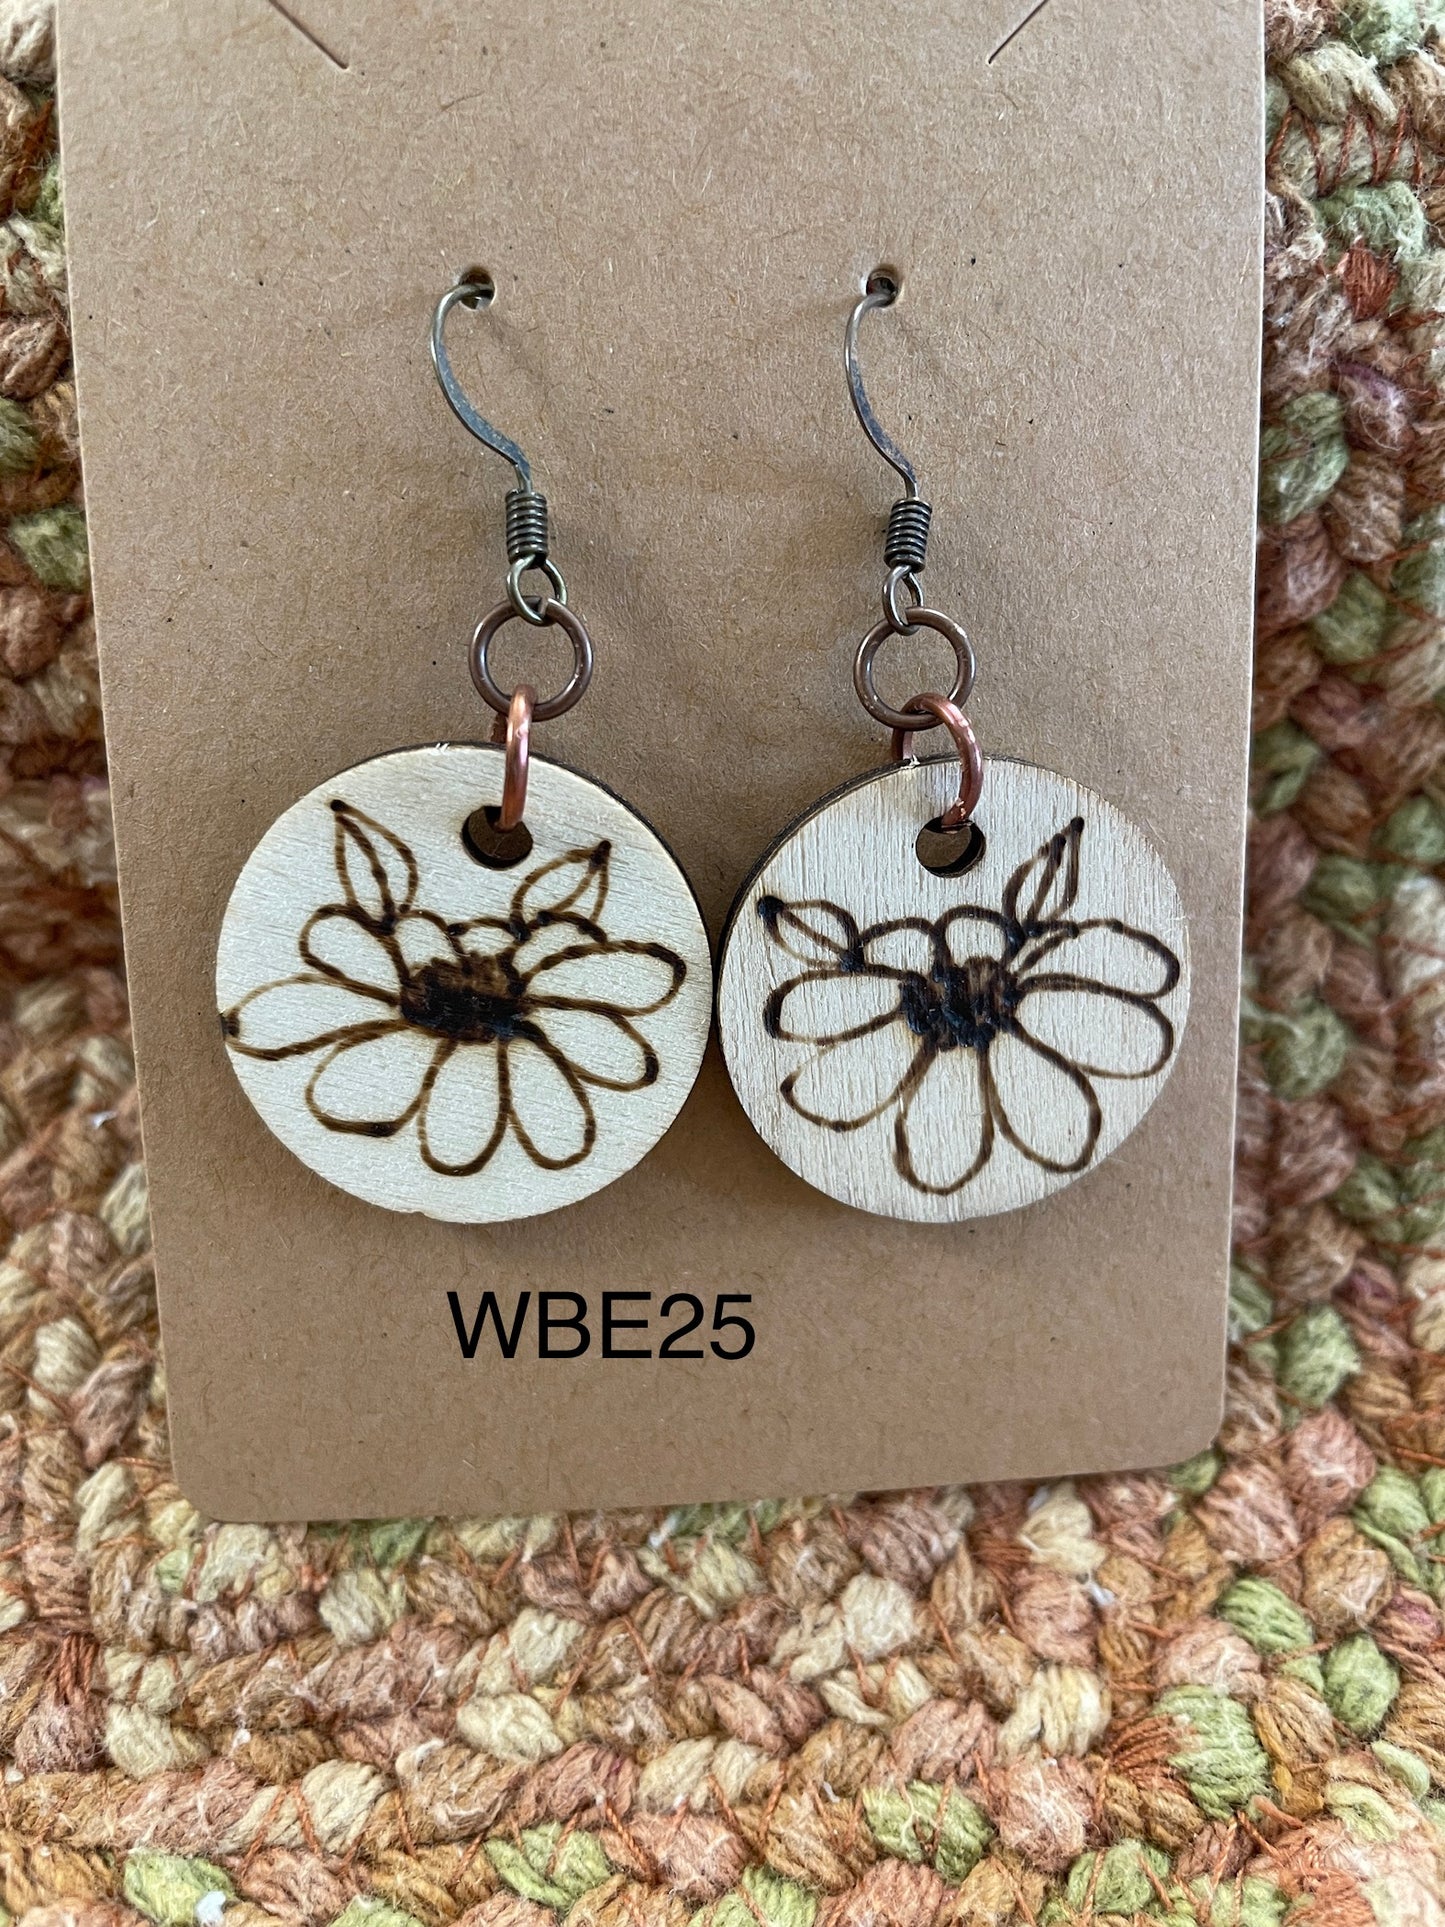 Wood burned flower earrings WBE35